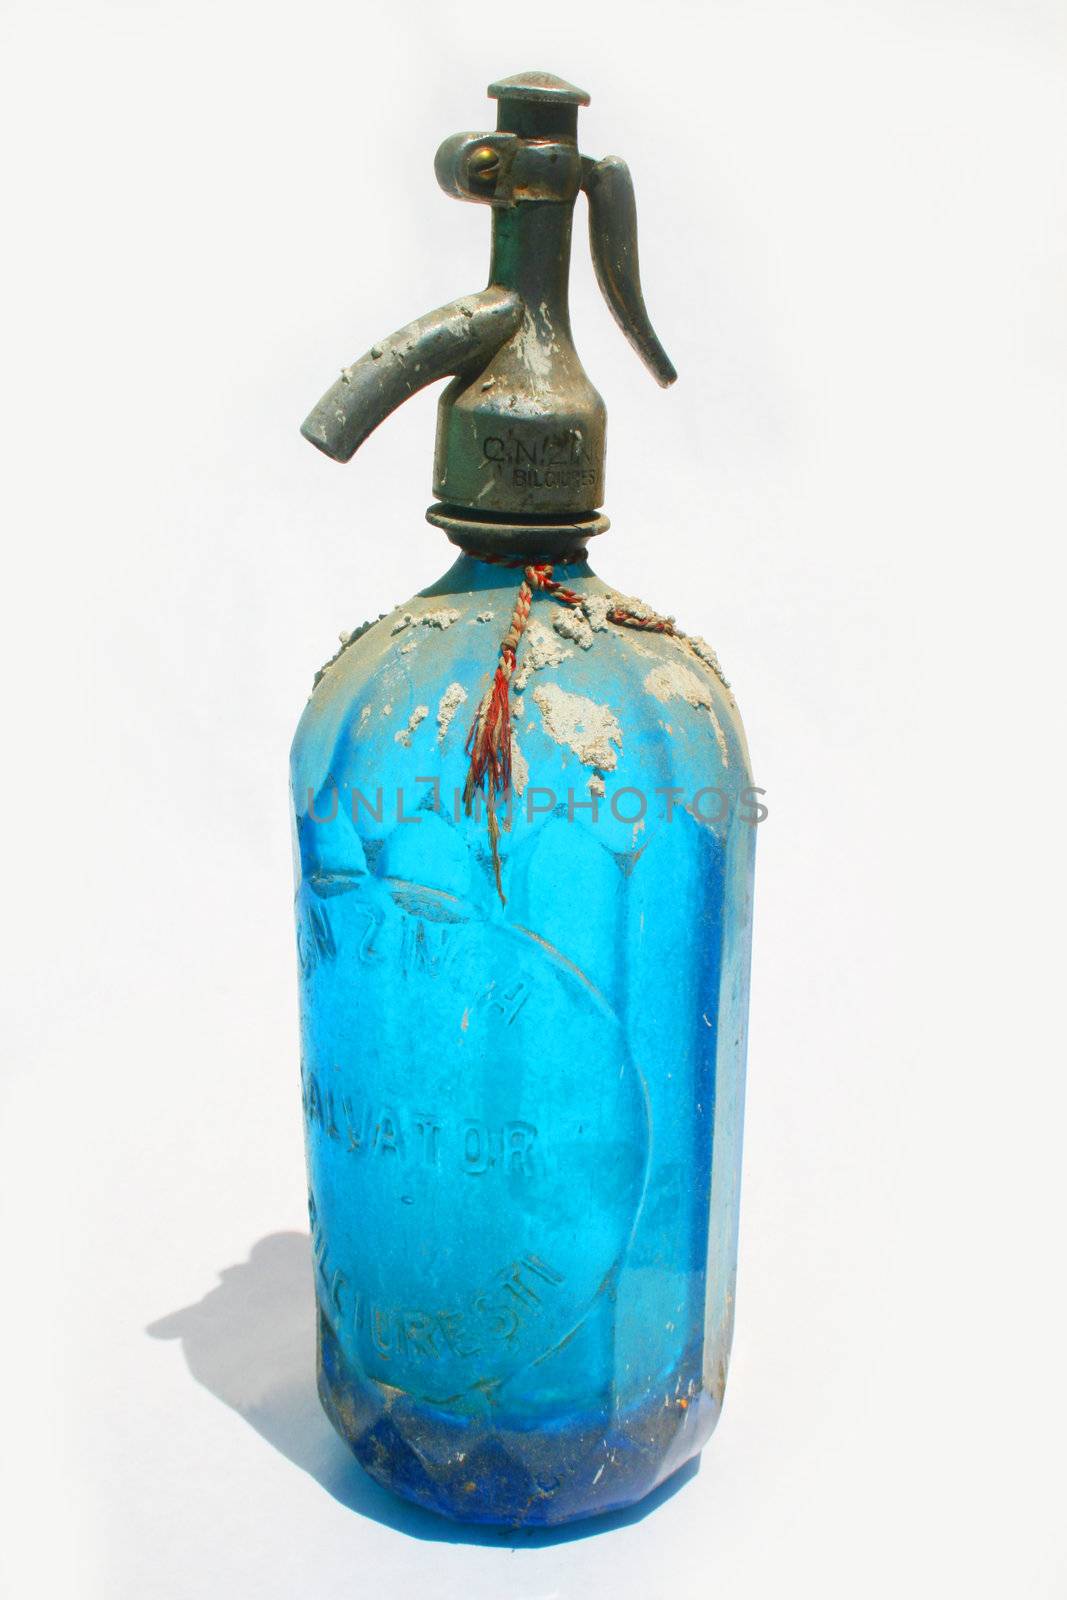 Antique blue seltzer bottle against white background